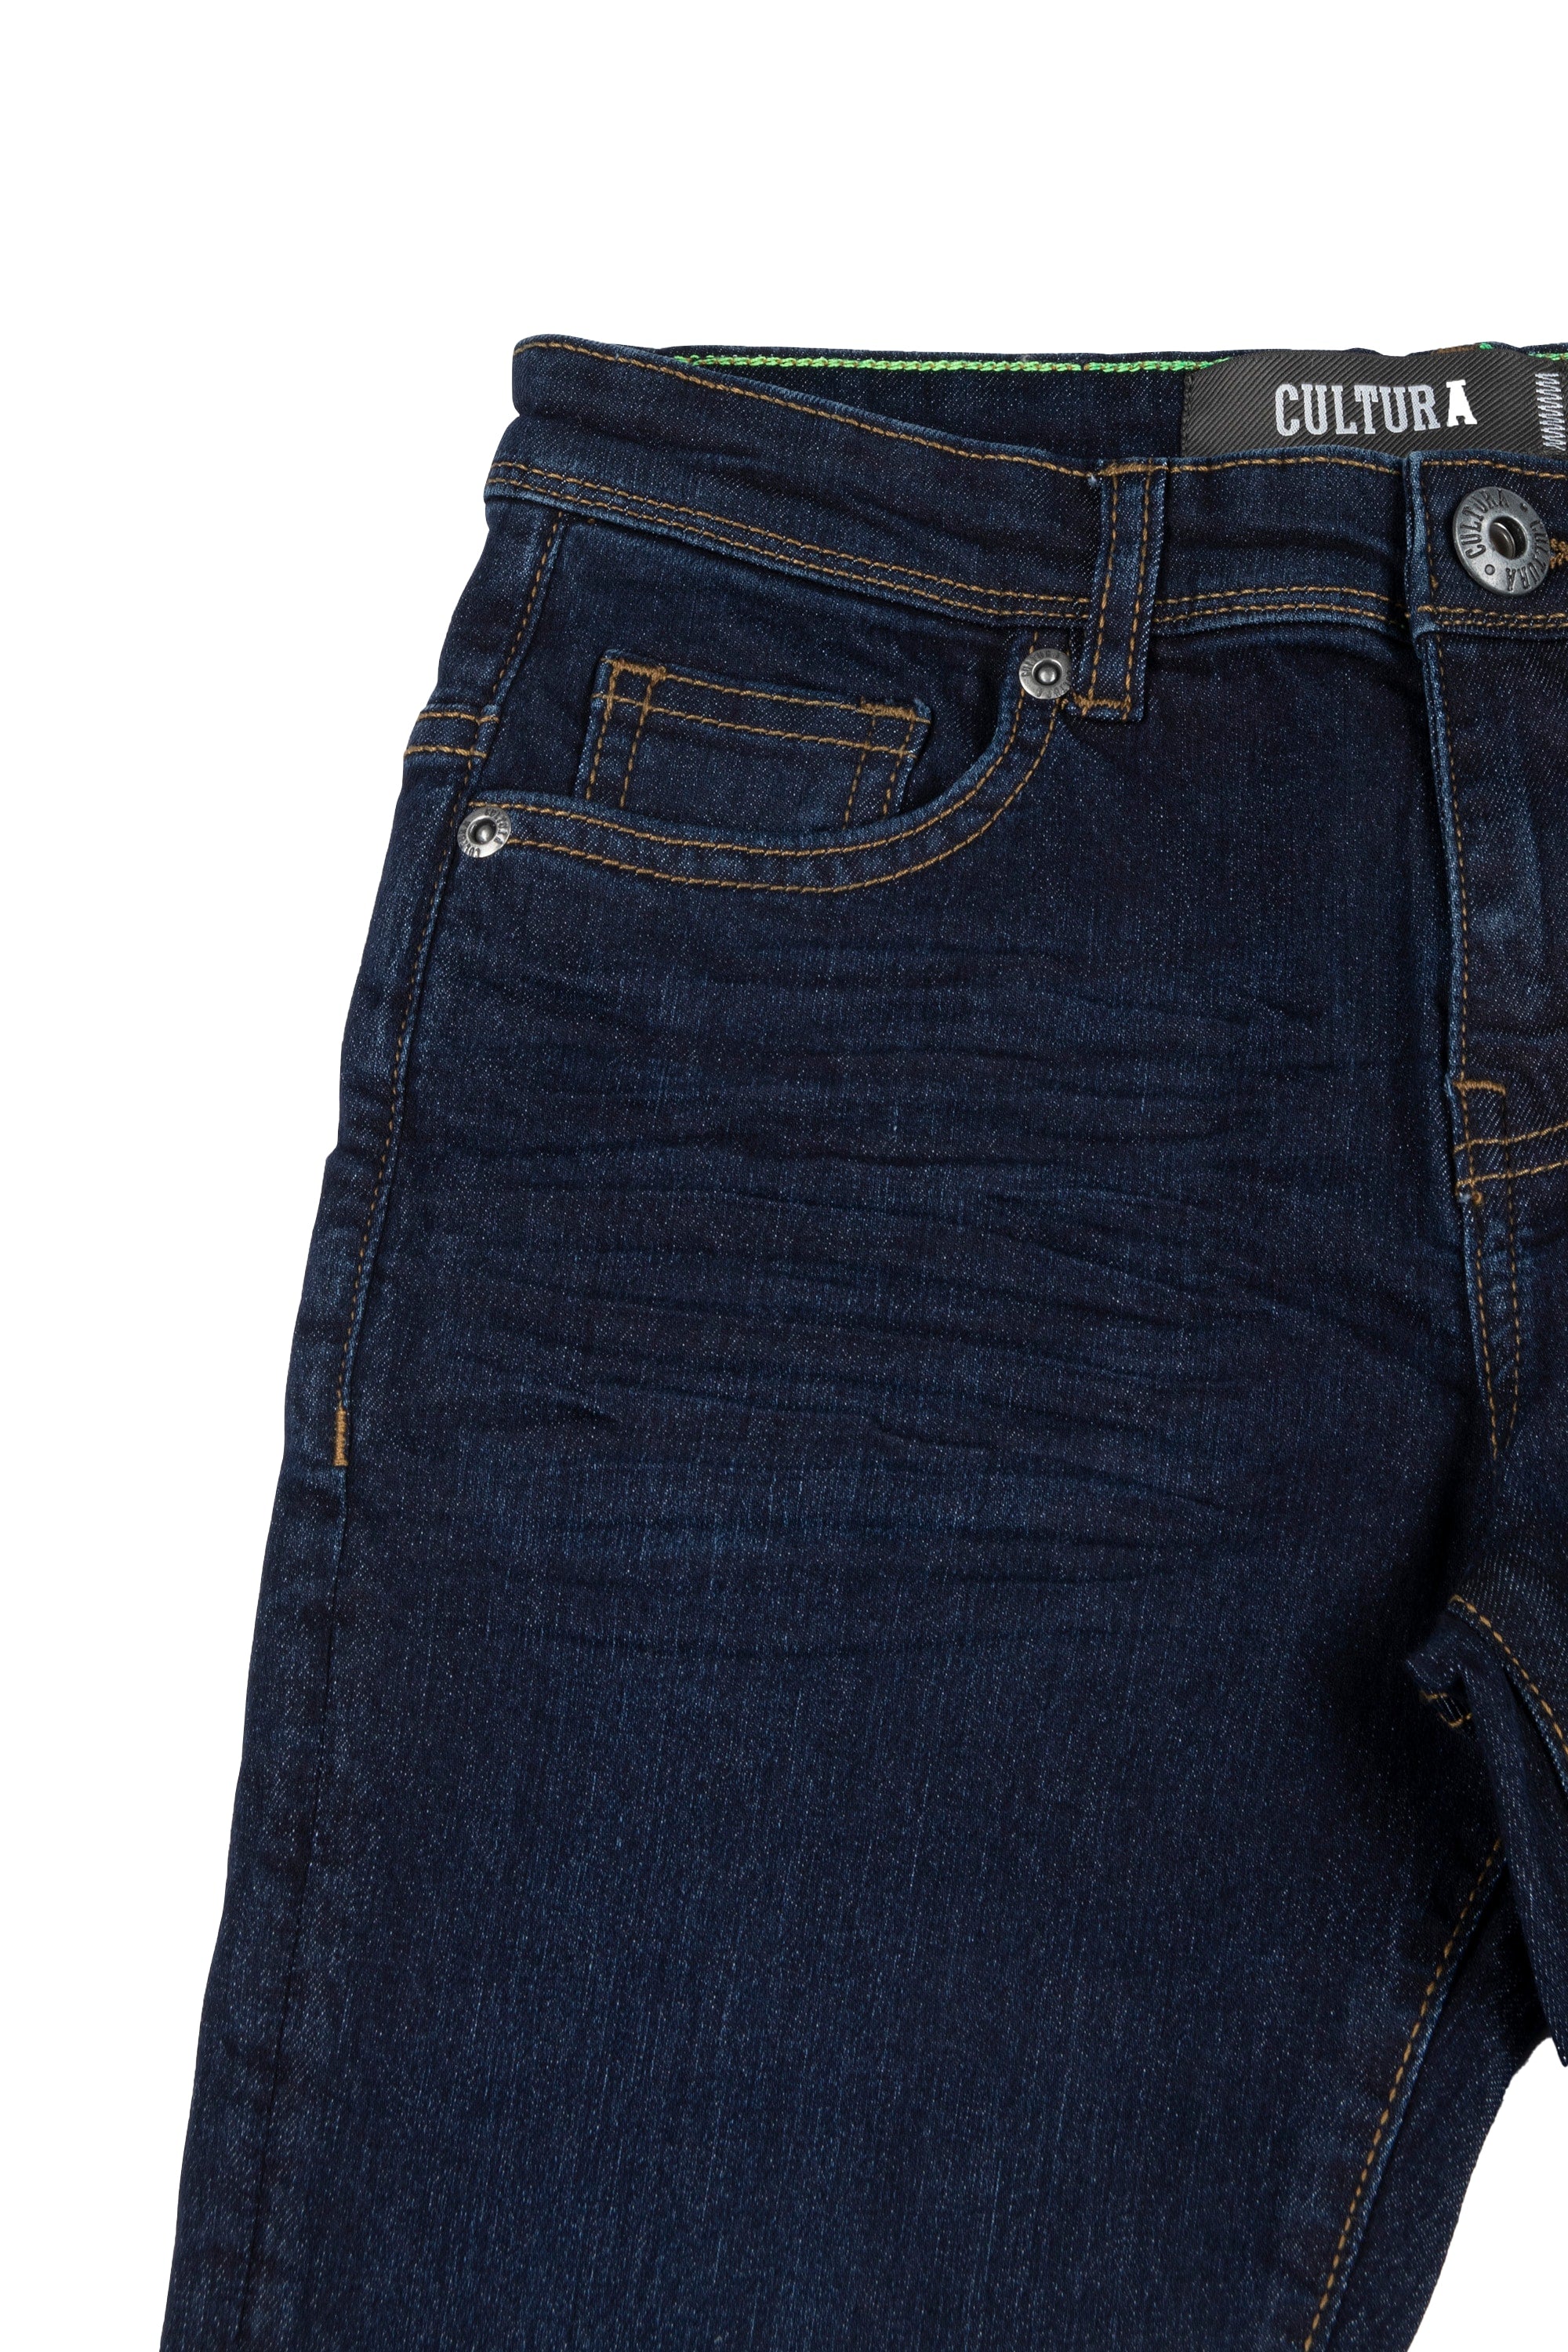 Pants X-RAY Cultura Slim Stitch – Jeans Wash Boys XRay JEANS Denim Accent